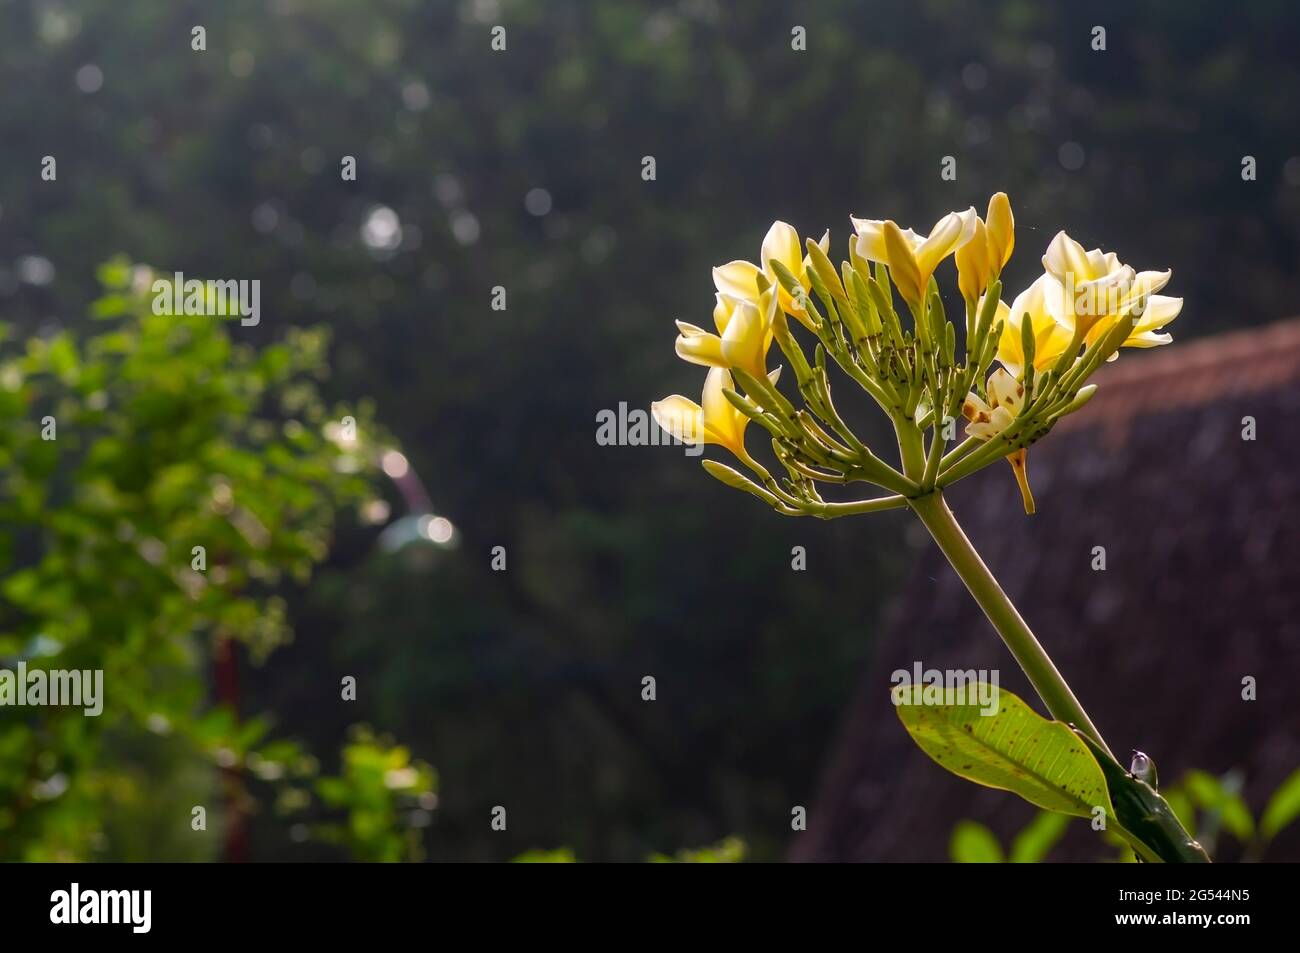 Kamboja flower (Plumeria), a genus of flowering plants in the family Apocynaceae Stock Photo